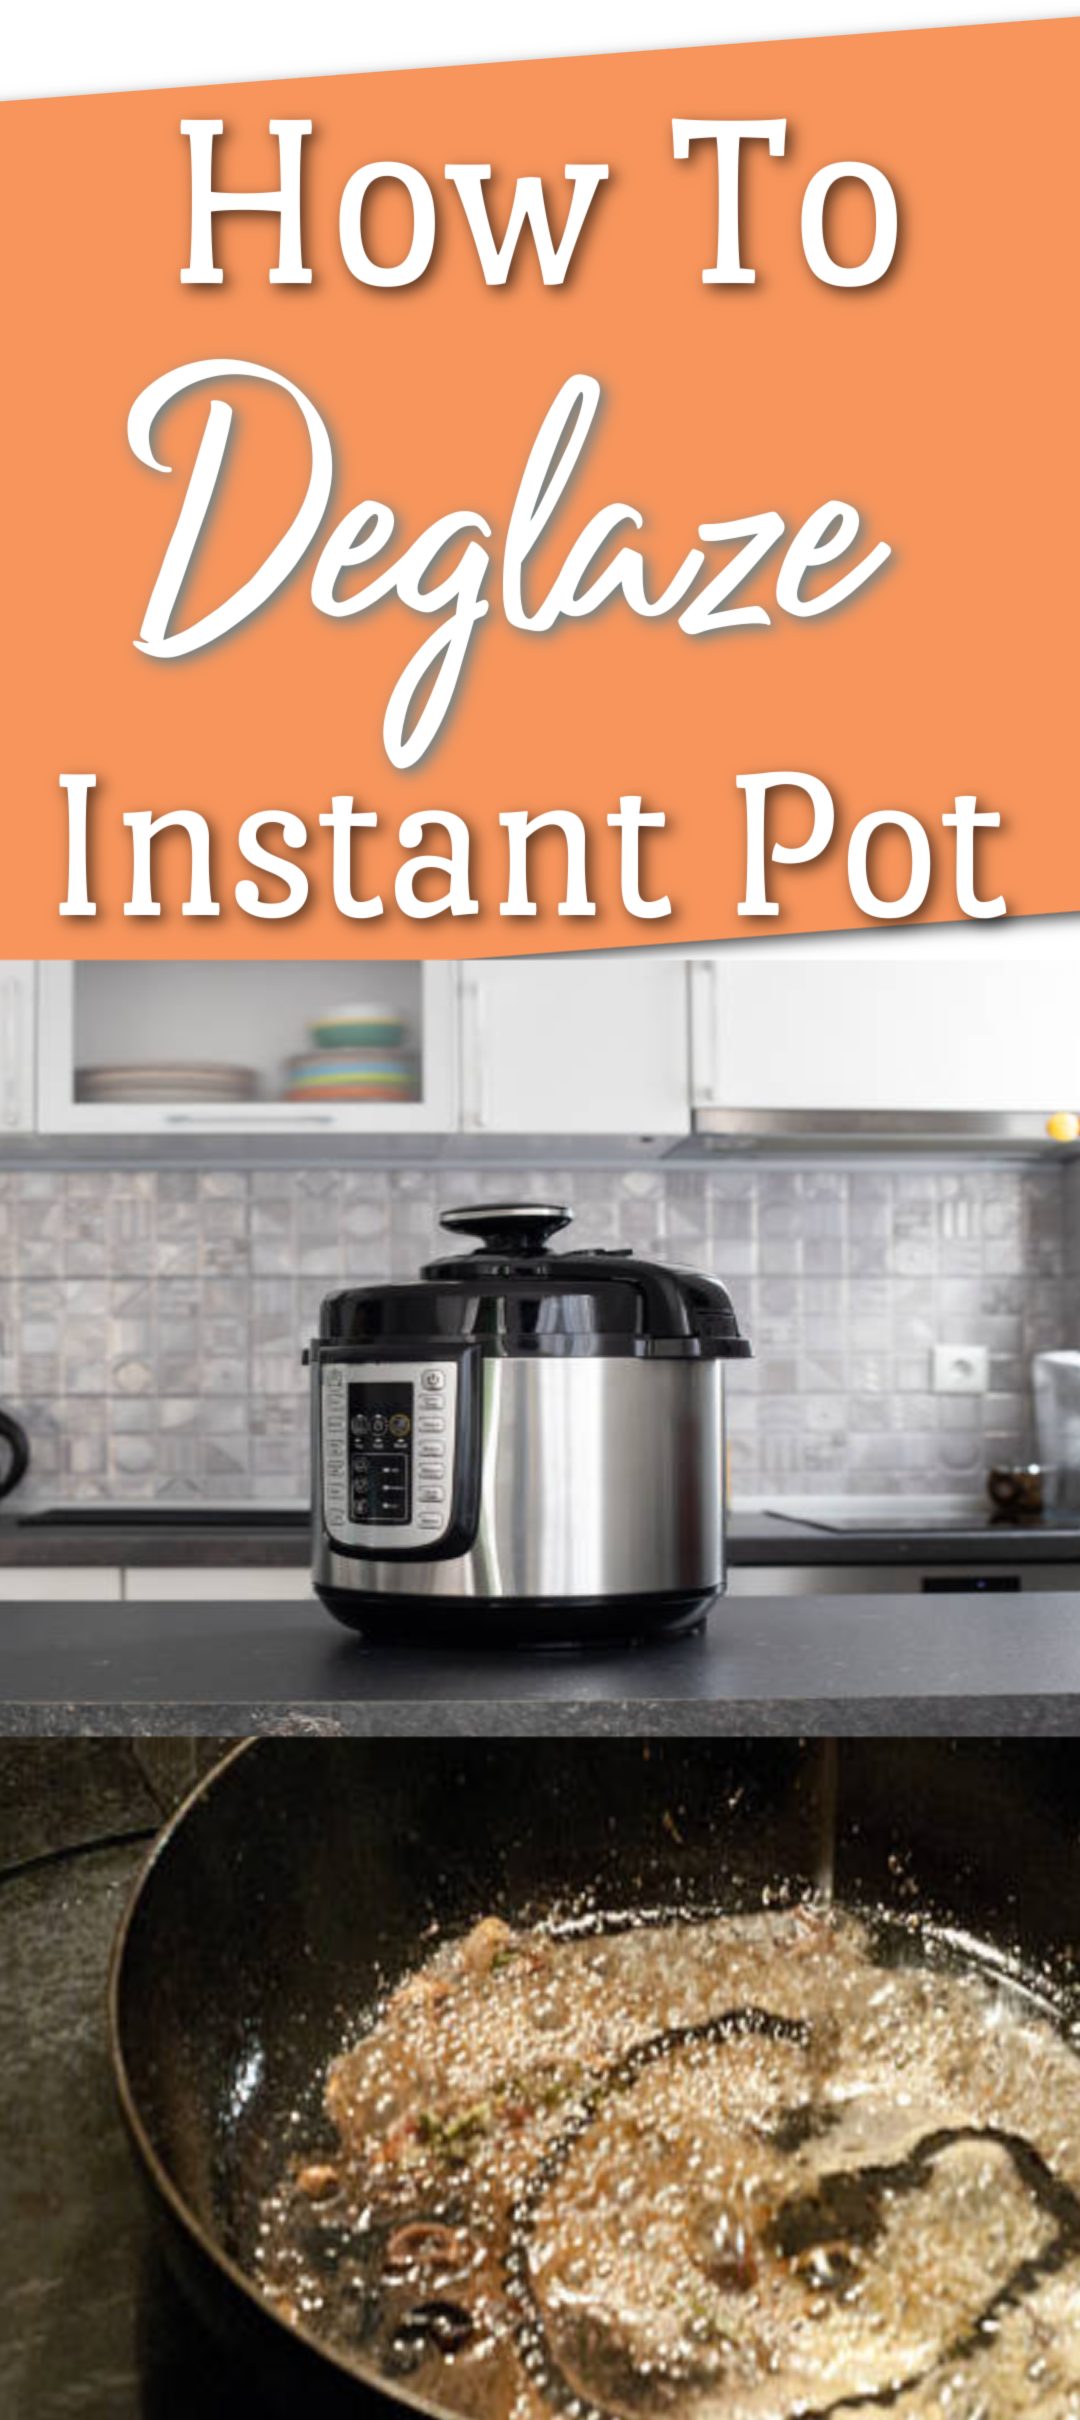 how to deglaze an instant pot